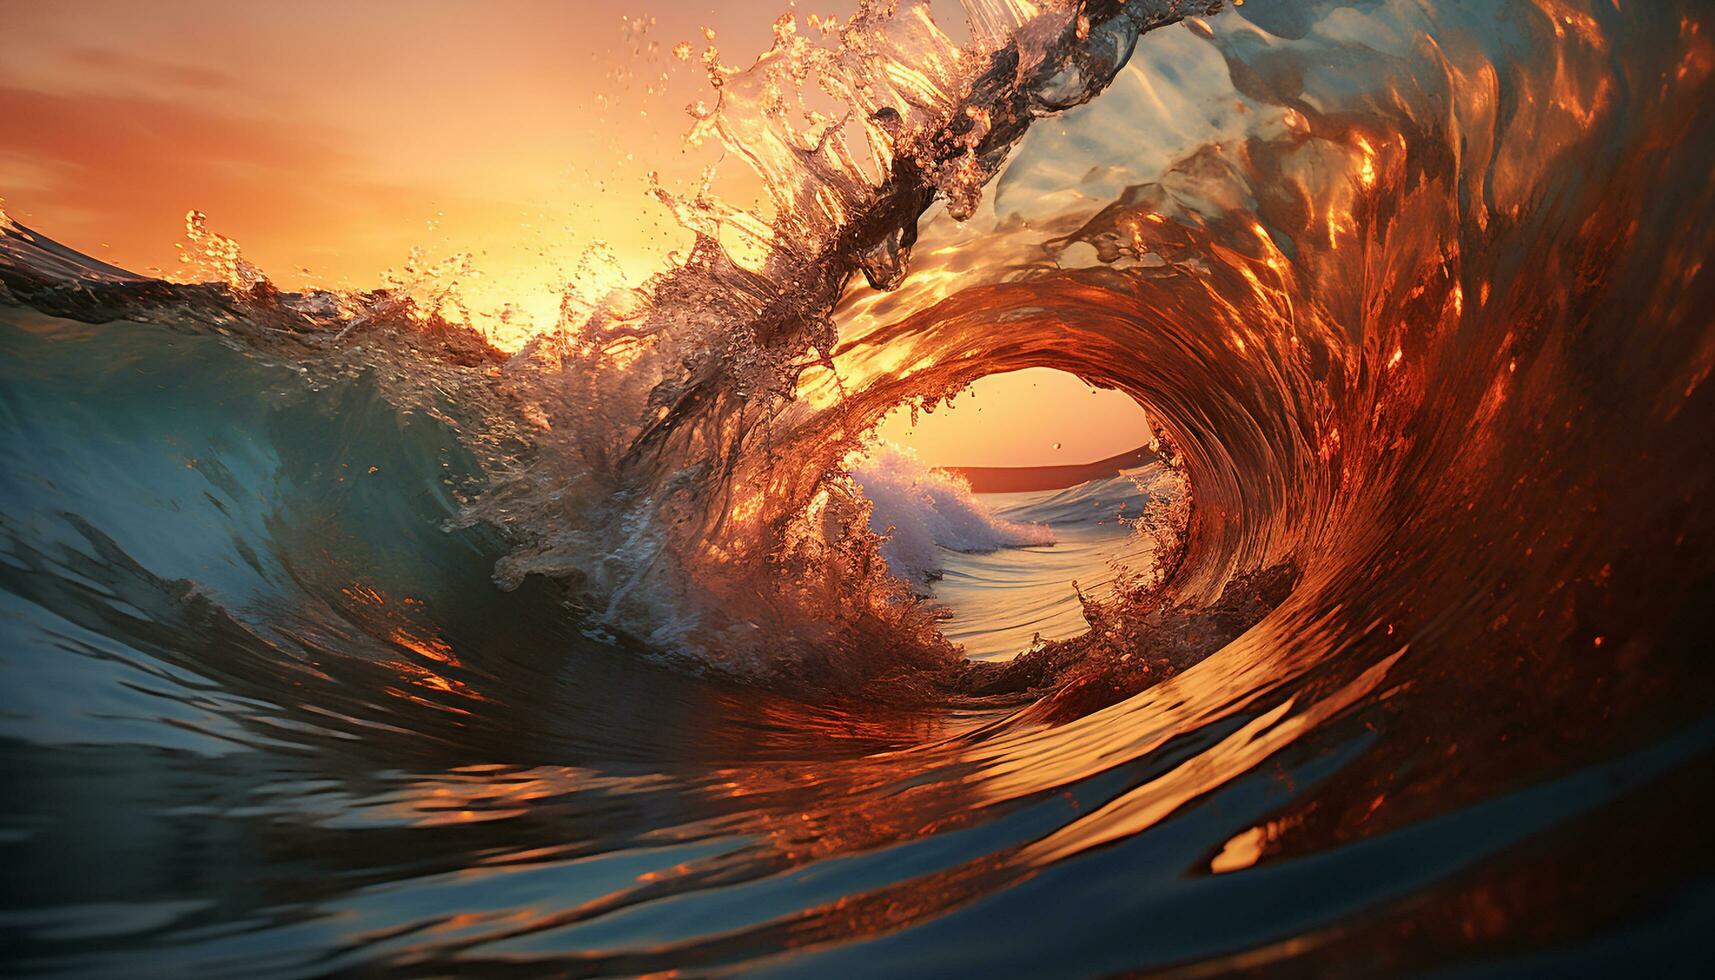 Majestic wave crashing, sunset reflection, nature beauty in motion generated by AI photo